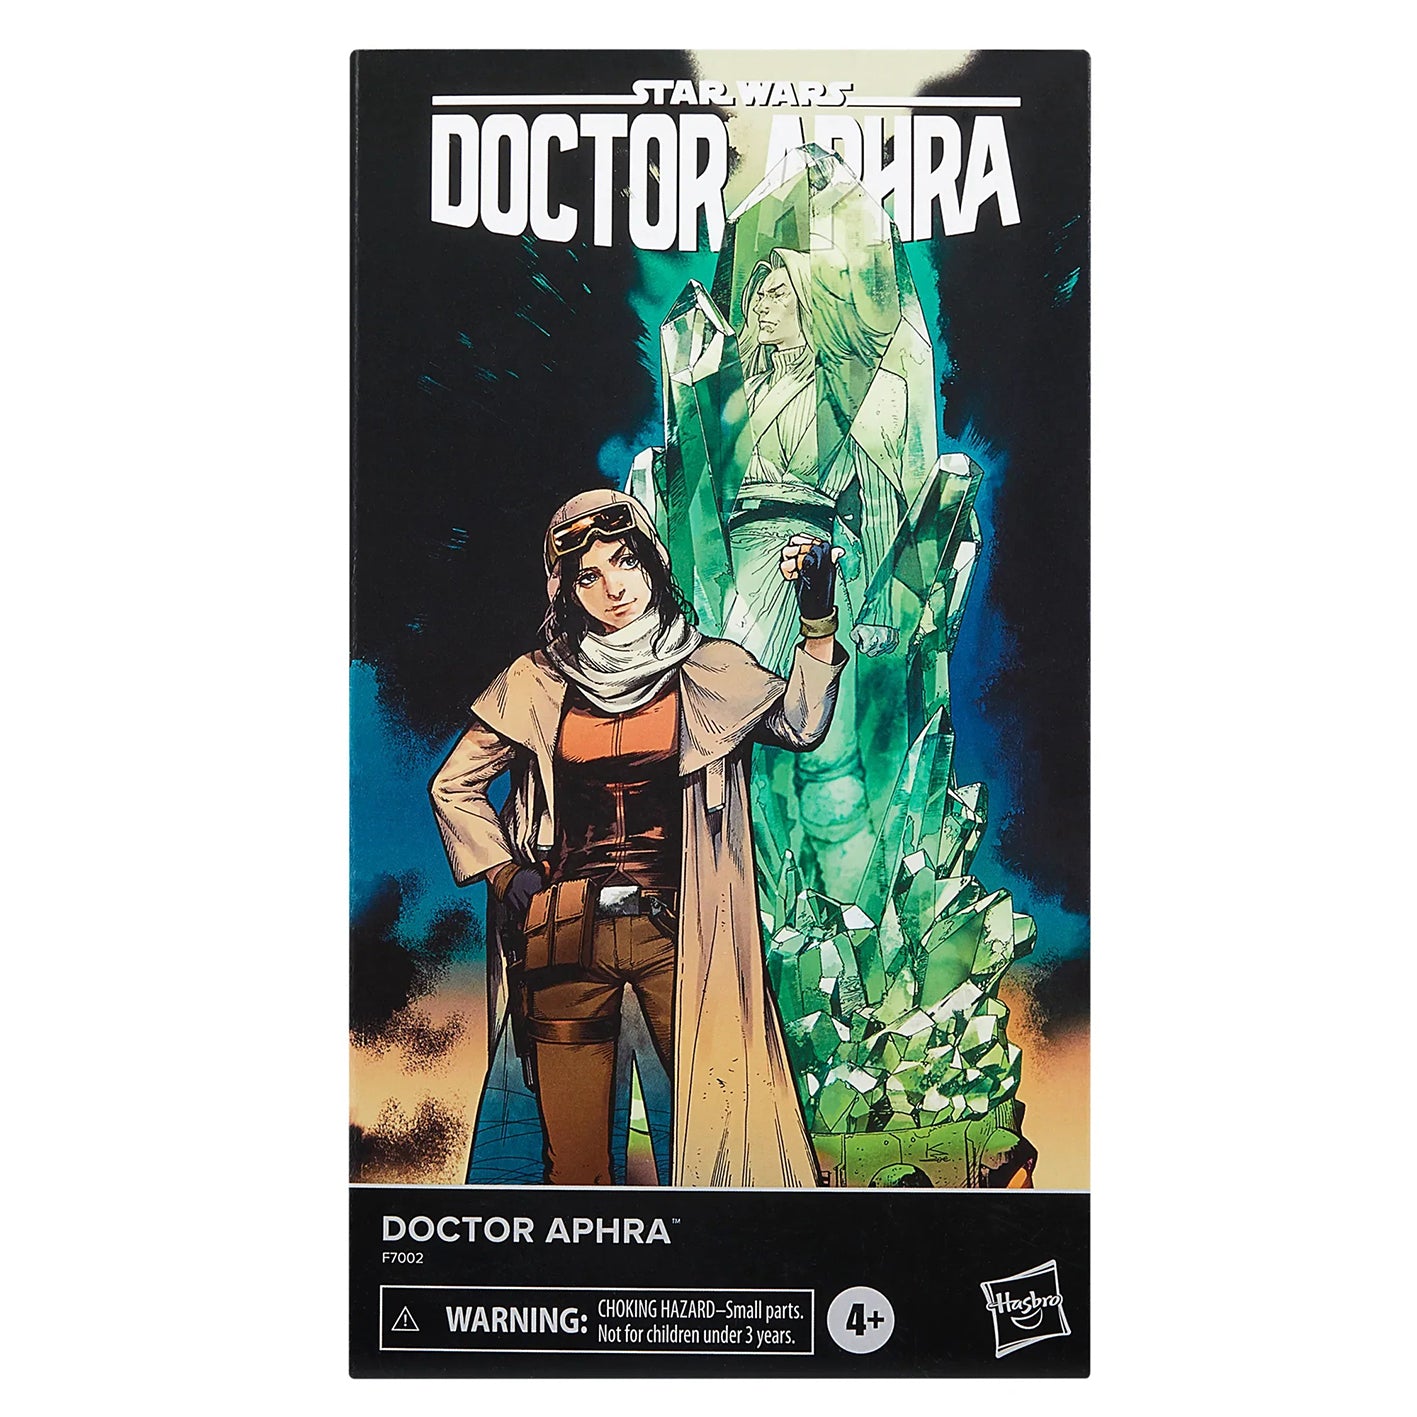 Doctor Aphra, Star Wars: The Black Series